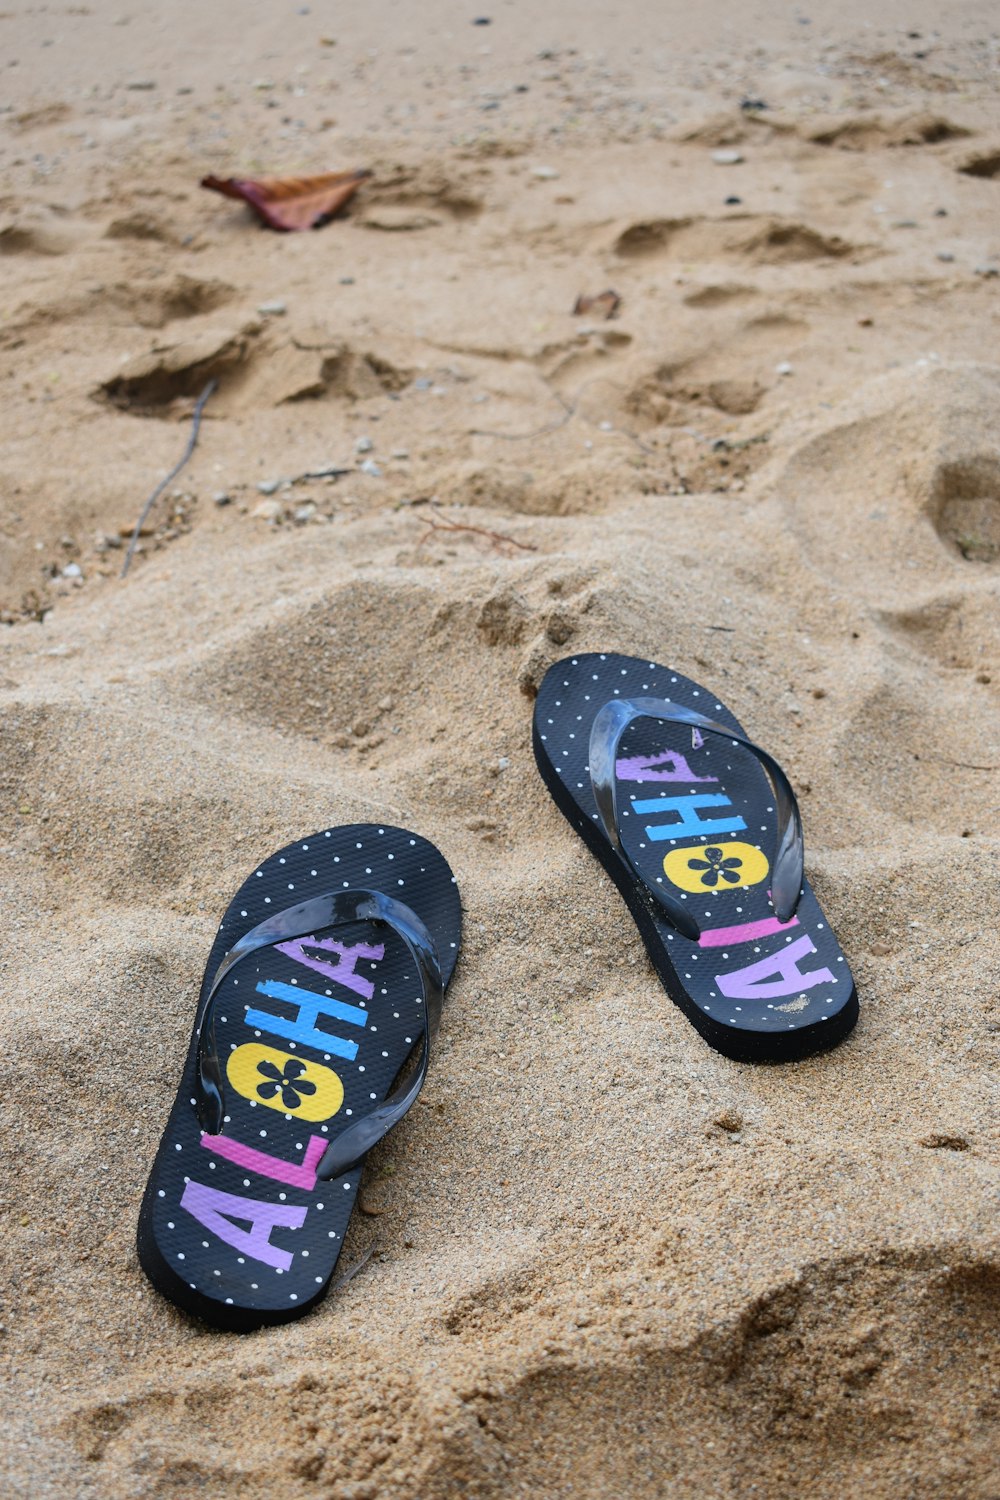 a pair of flip flops sitting on top of a sandy beach